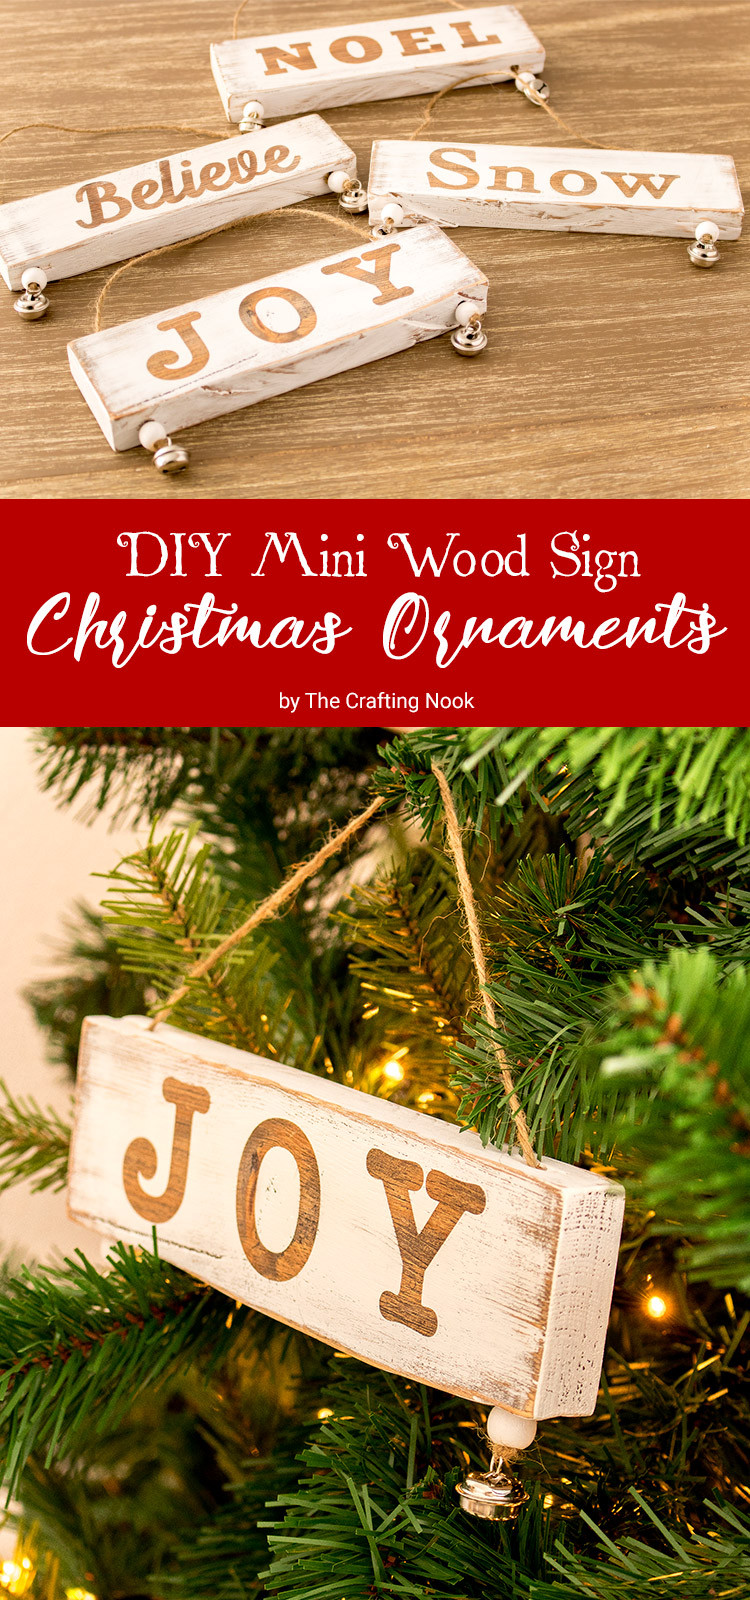 DIY Wooden Christmas Signs
 DIY Mini Wood Sign Christmas Ornaments